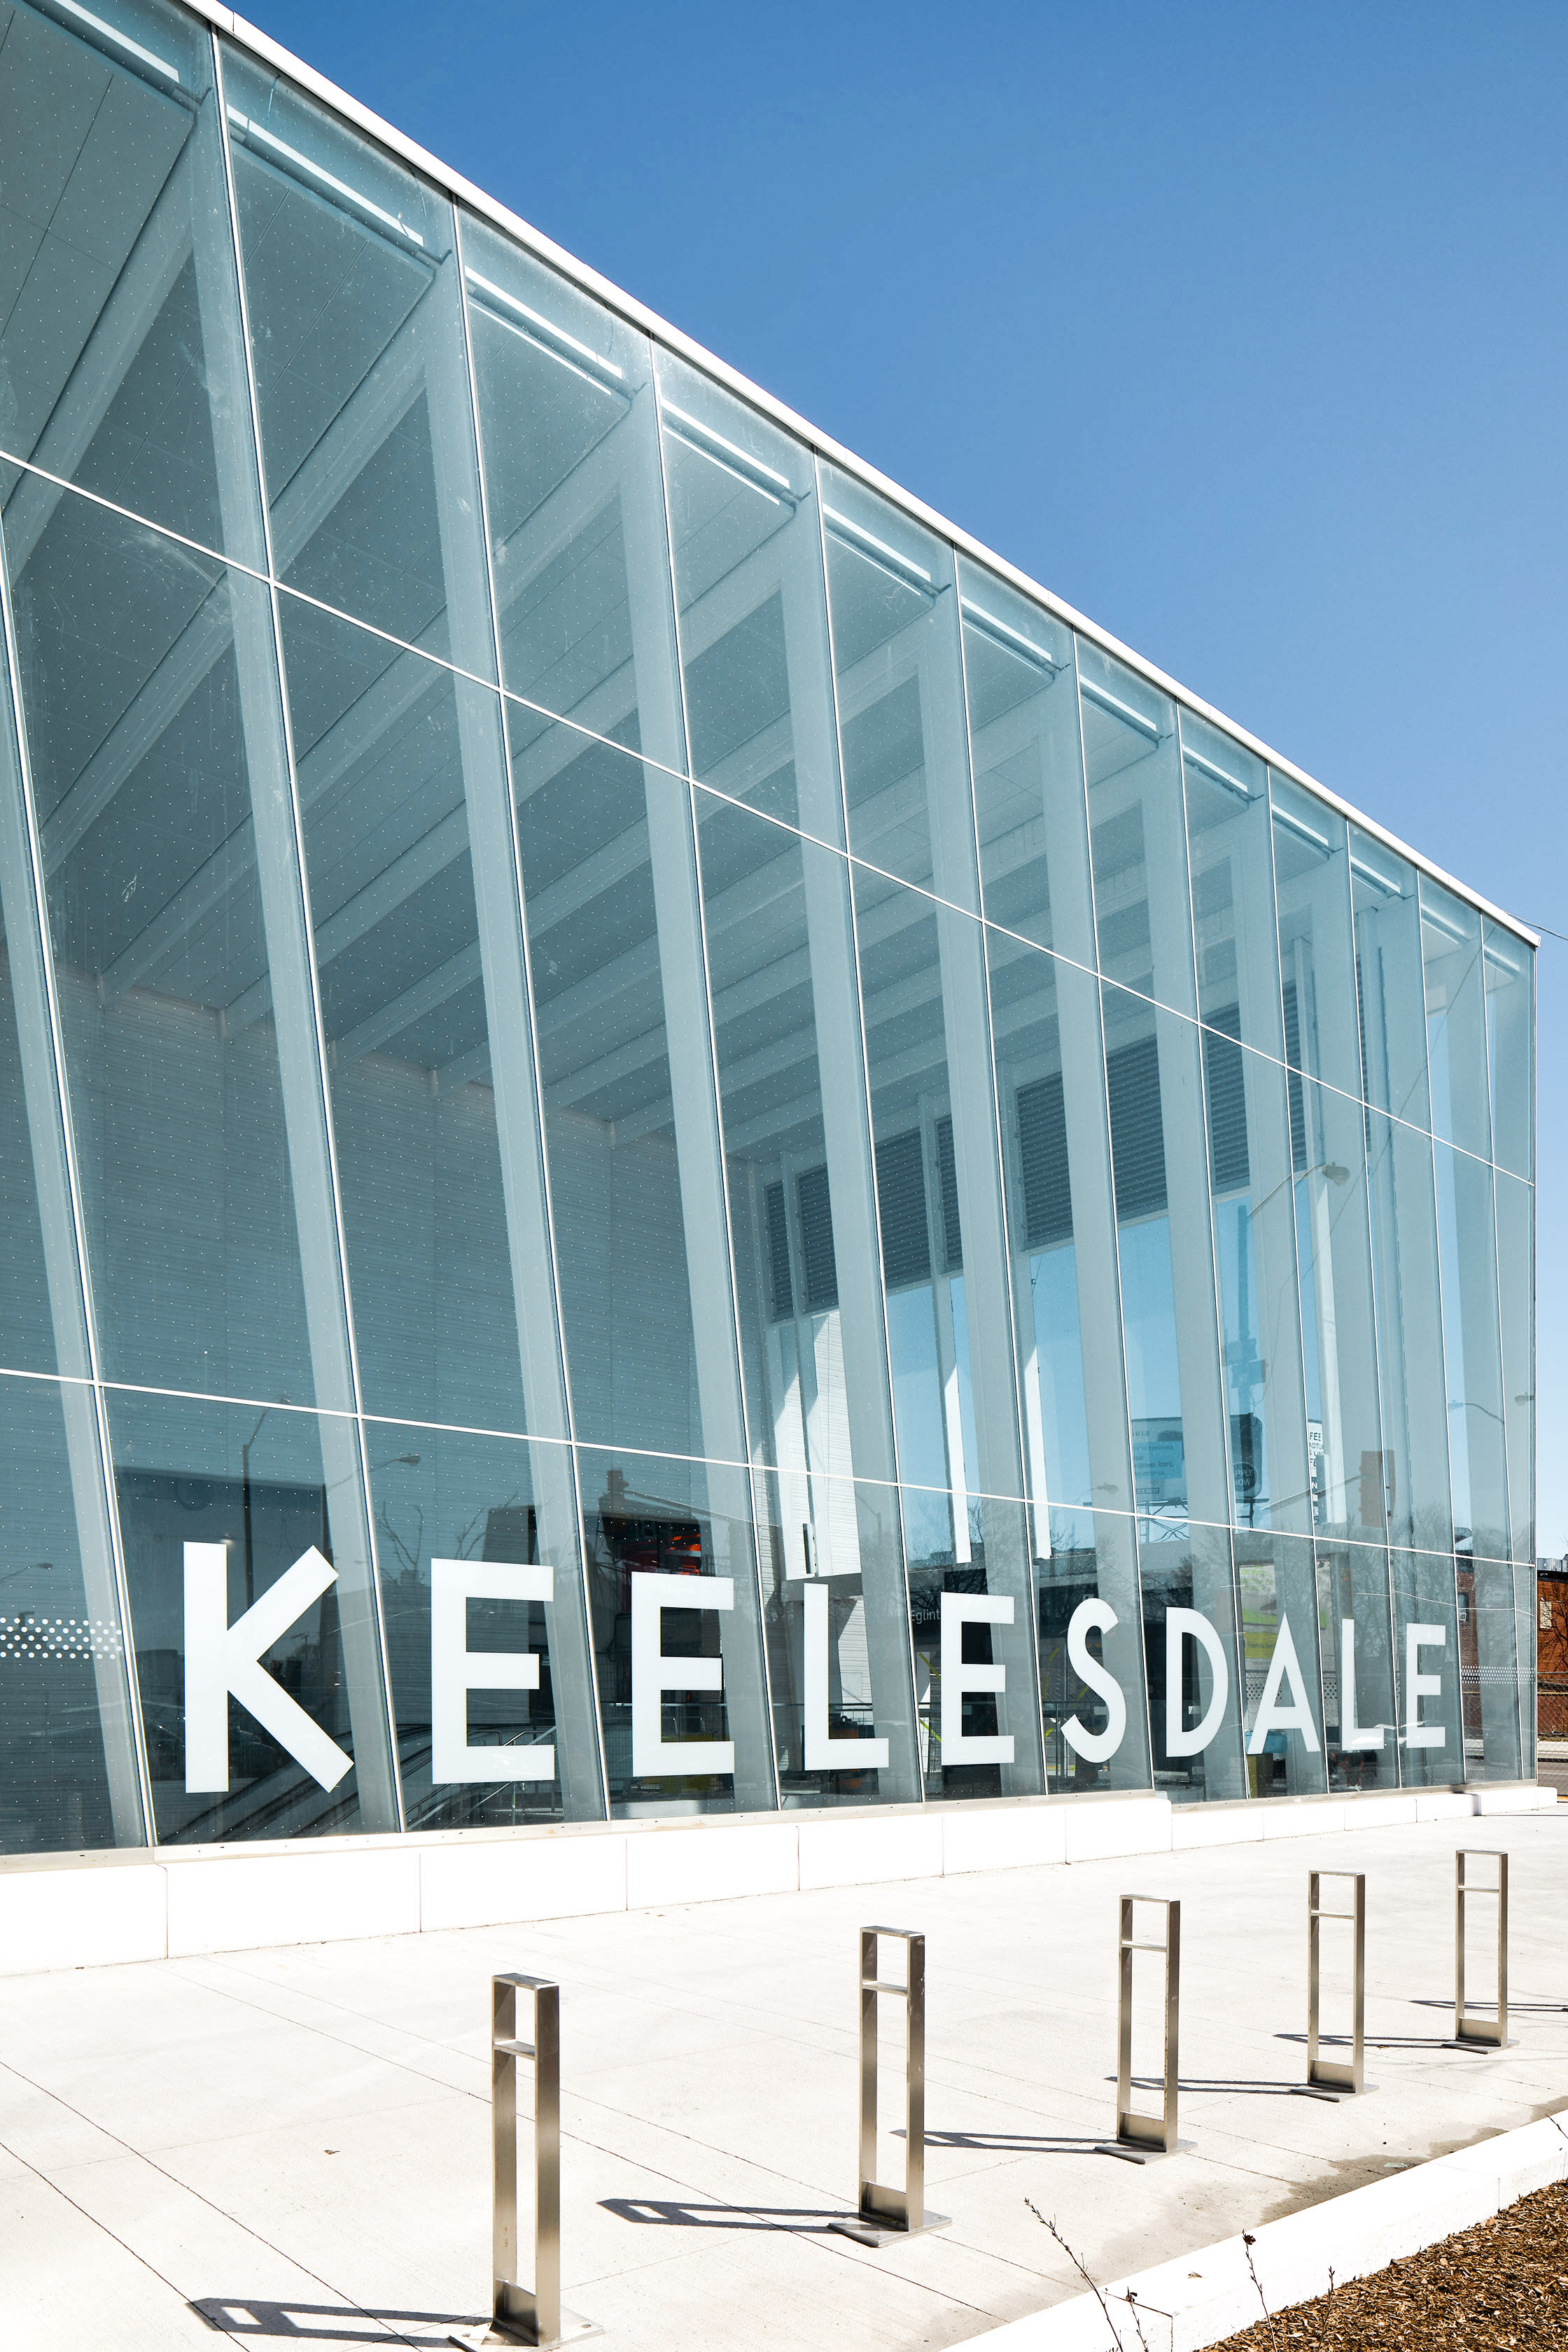 Keelesdale Crosstown Station